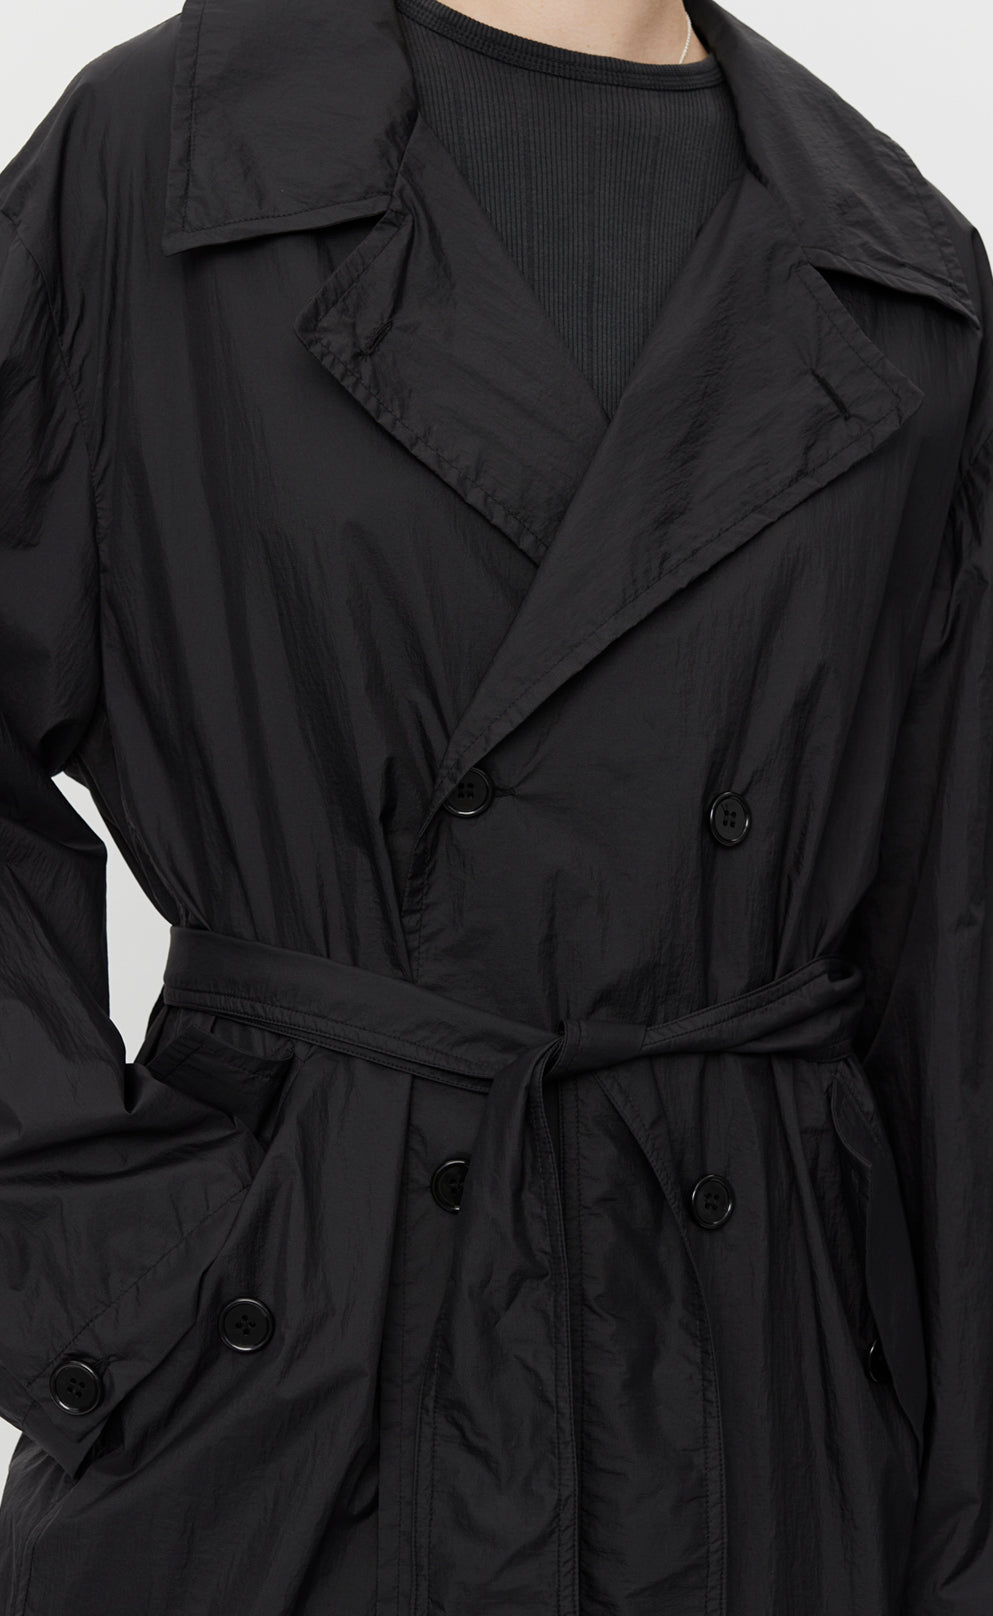 Women's Industry Coat - Recycled Black